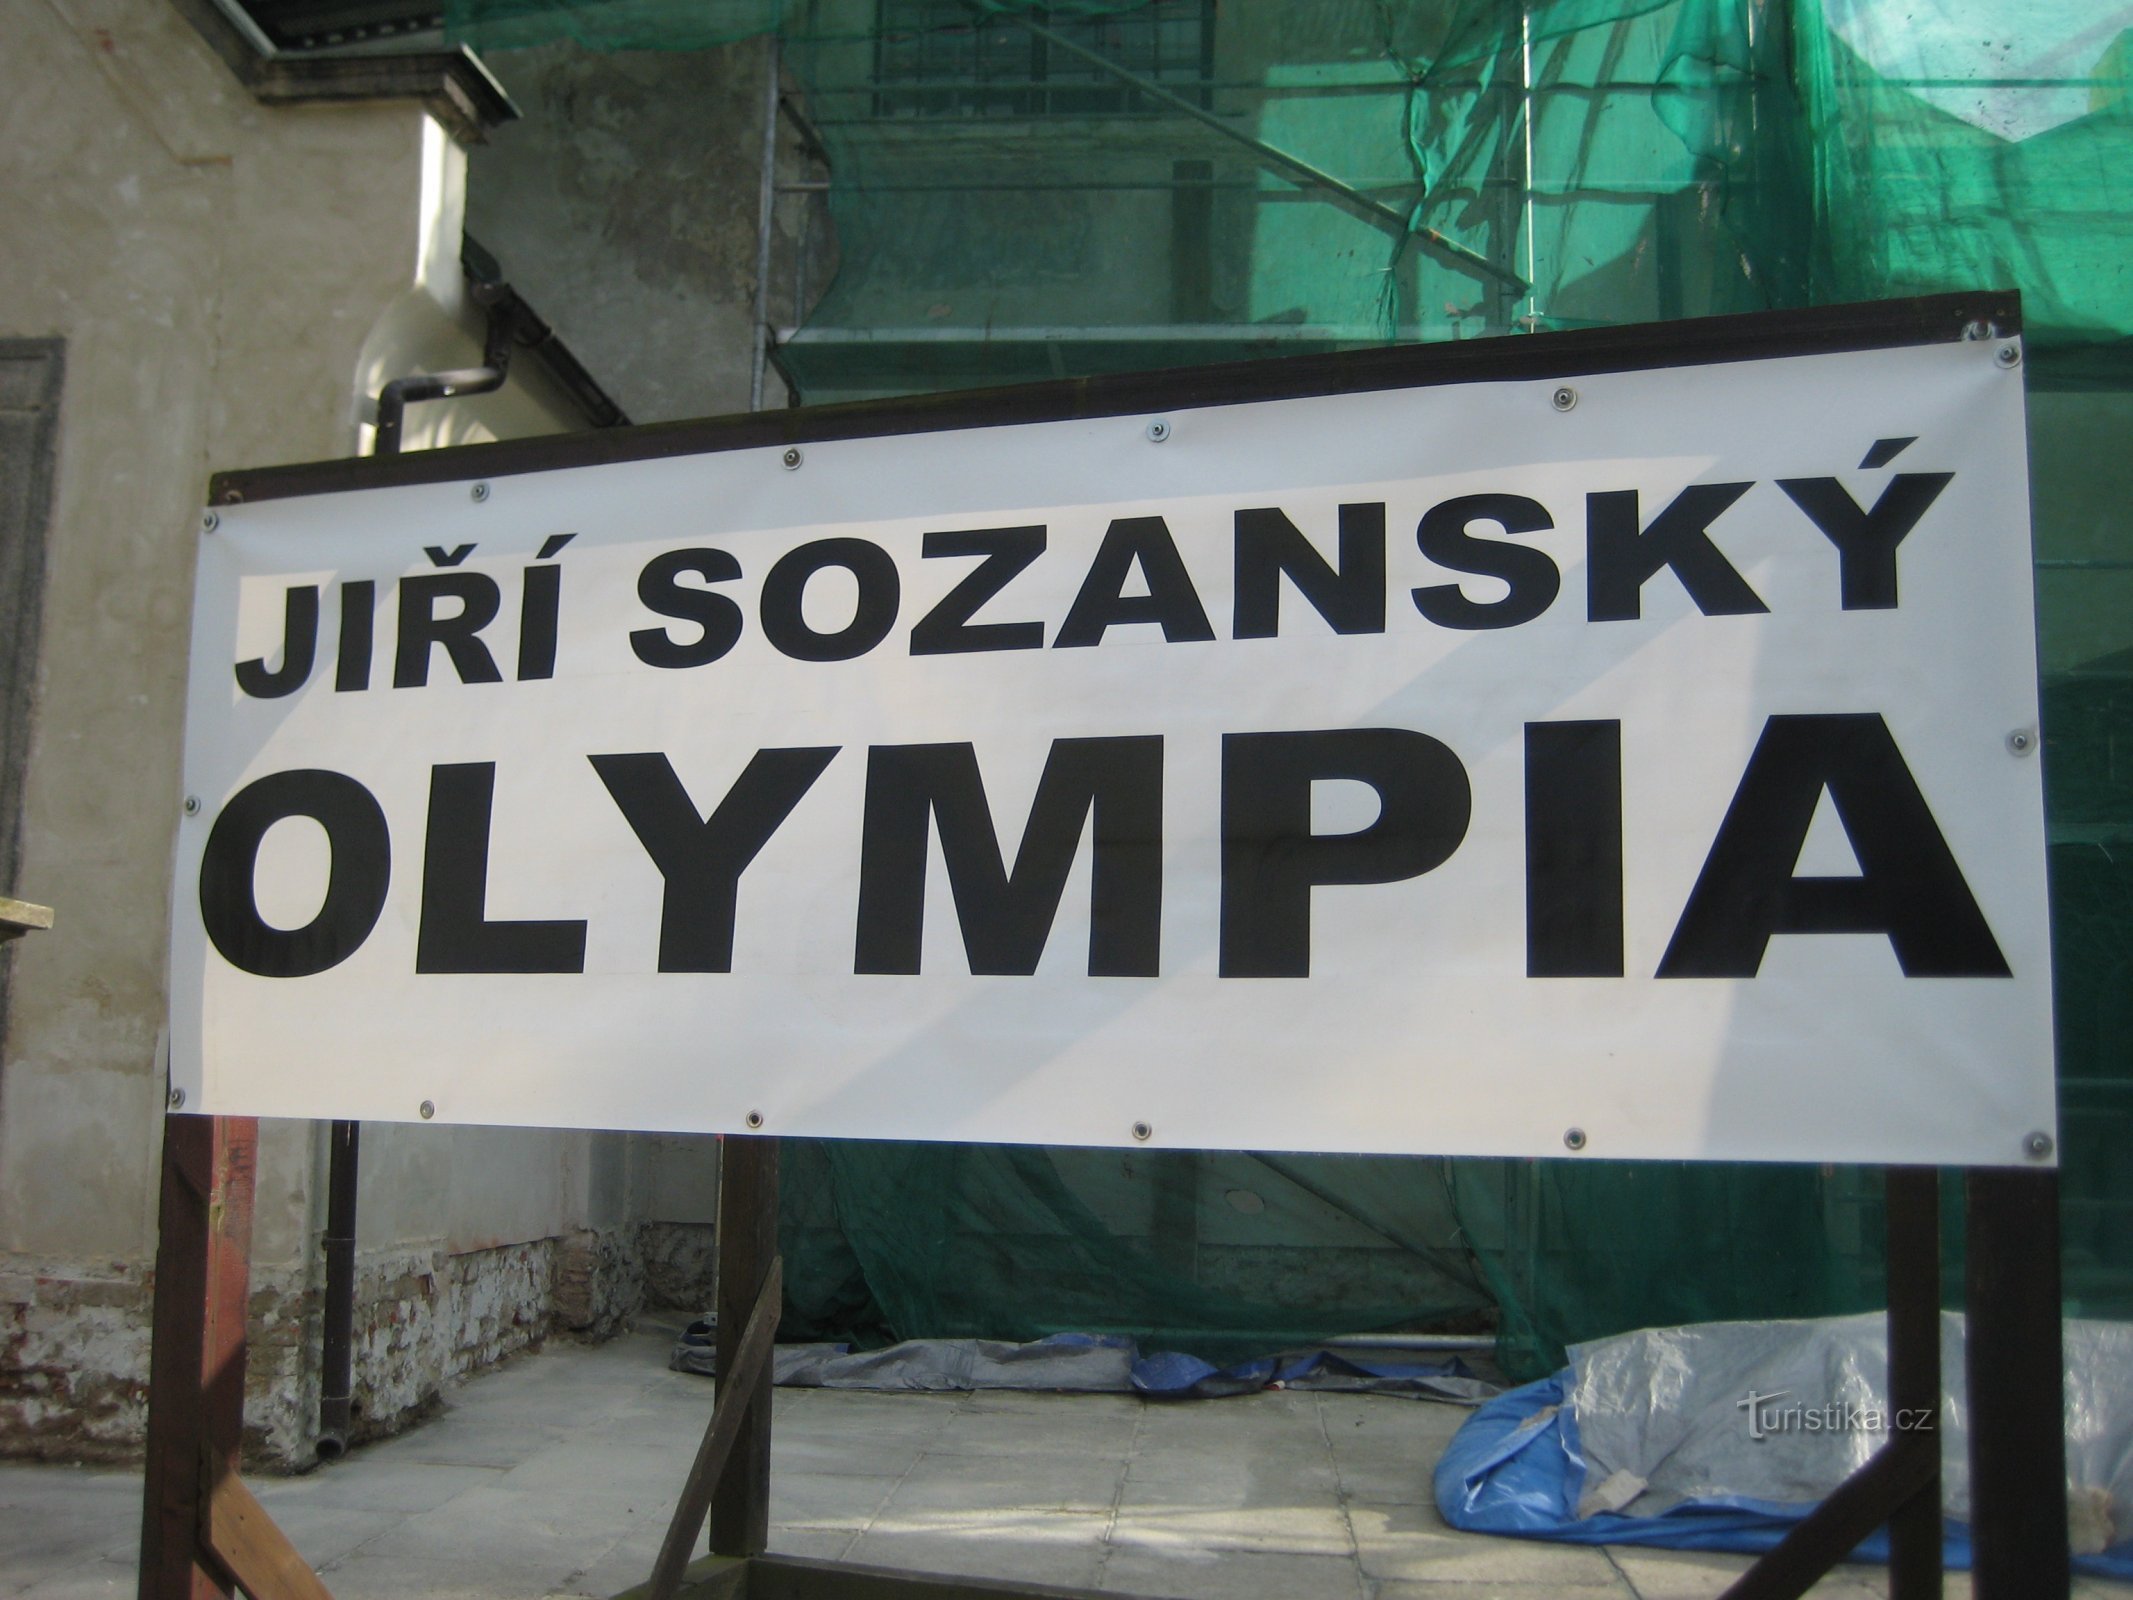 Wystawa Jiří Sozanský - Olympia - Sokolov